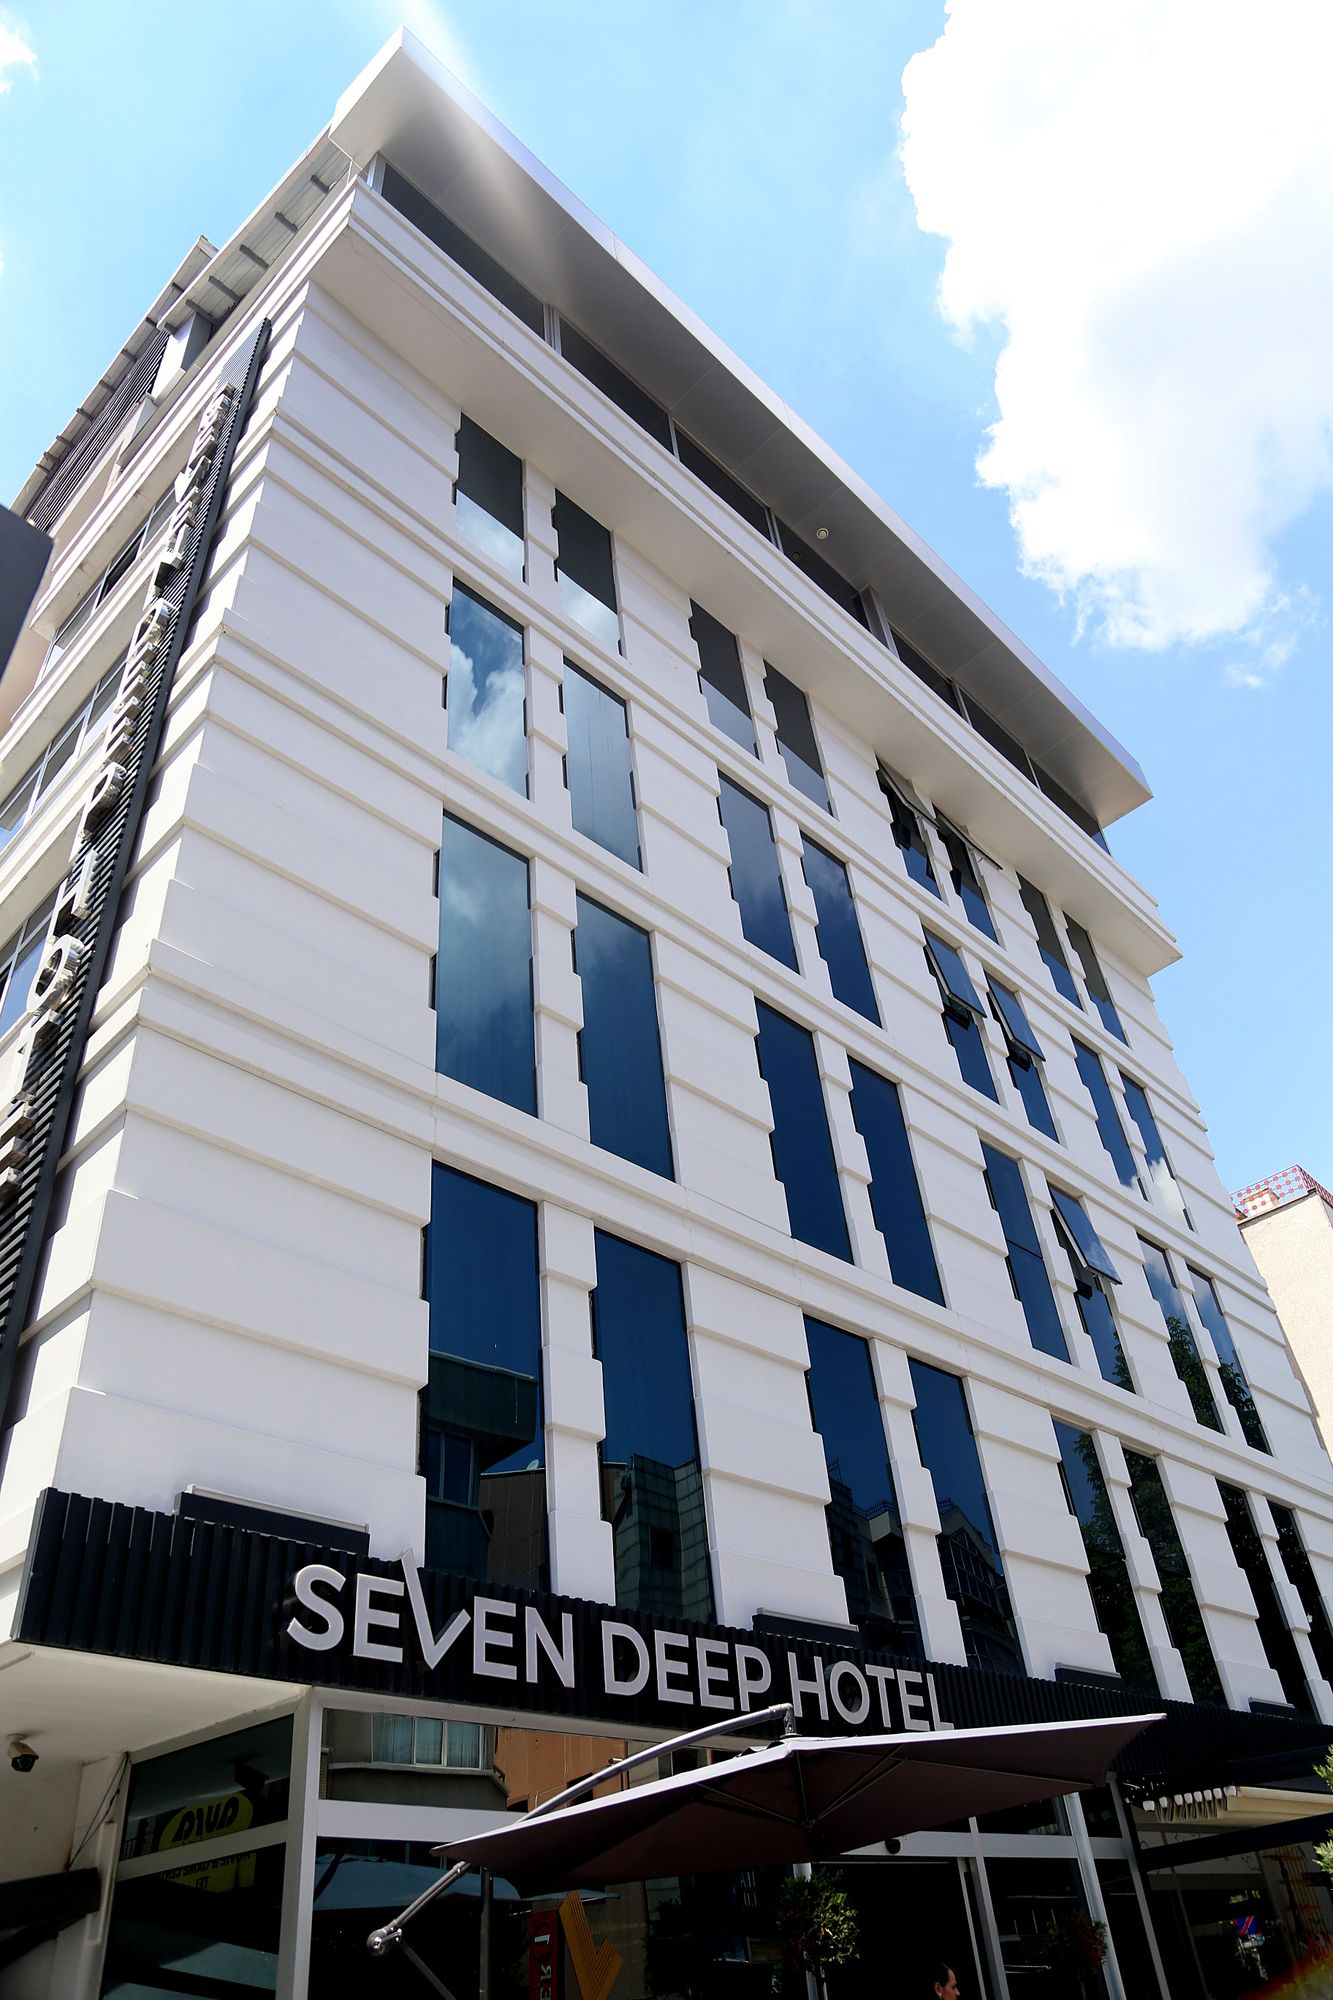 Seven Deep Hotel